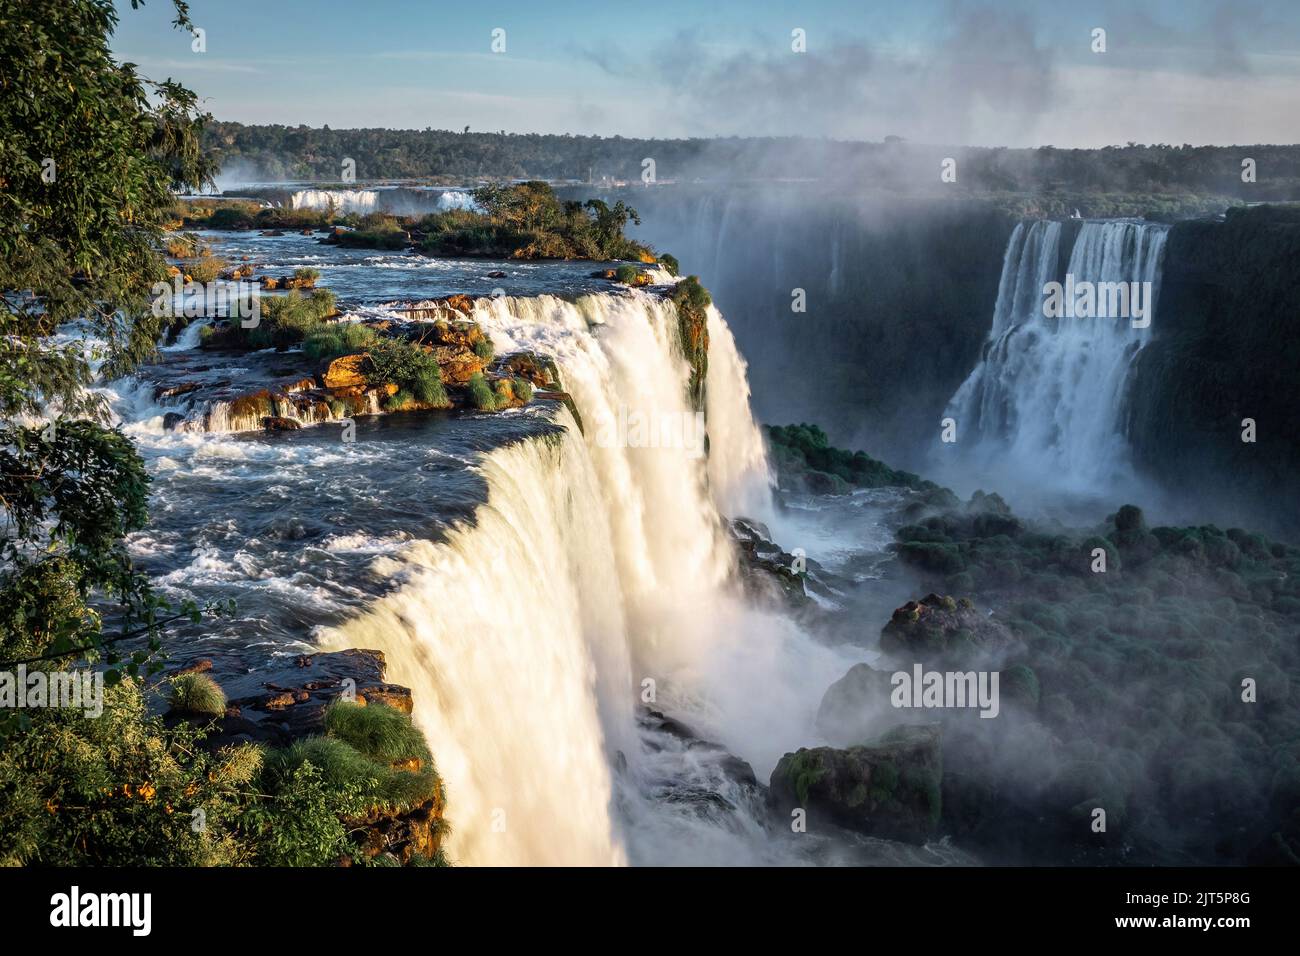 World famous Iguazu Falls on the border of Brazil and Argentina. Stock Photo